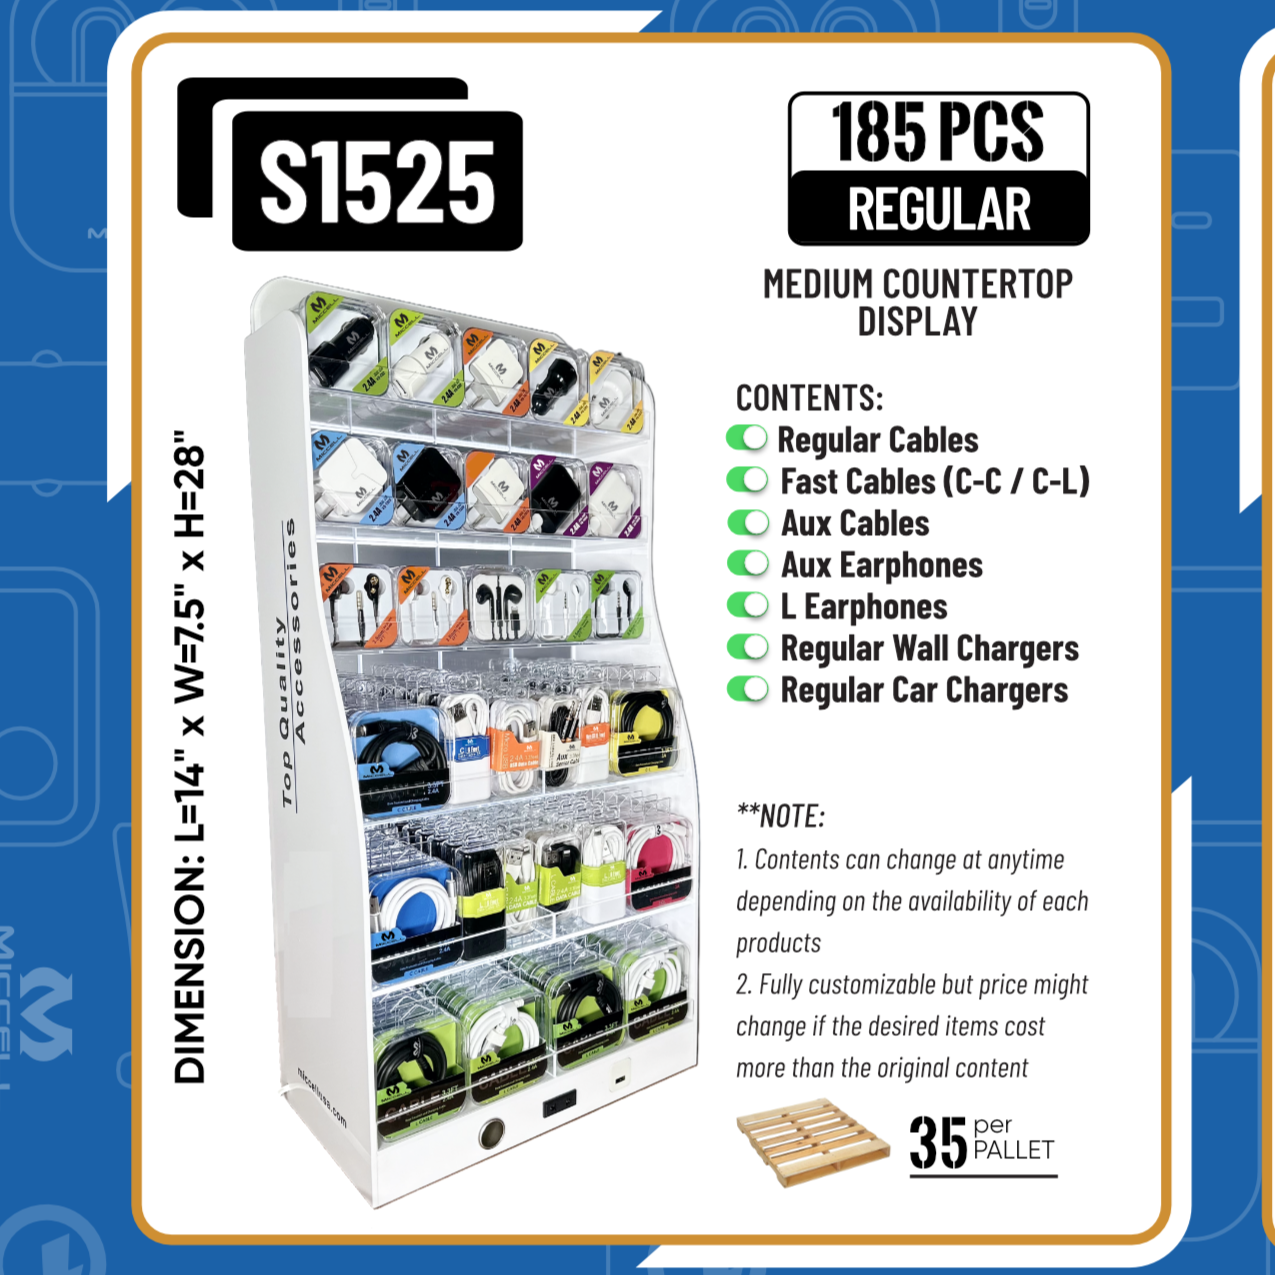 S1525 Miccell Countertop Display MEDIUM (185 pieces) (Bundle)